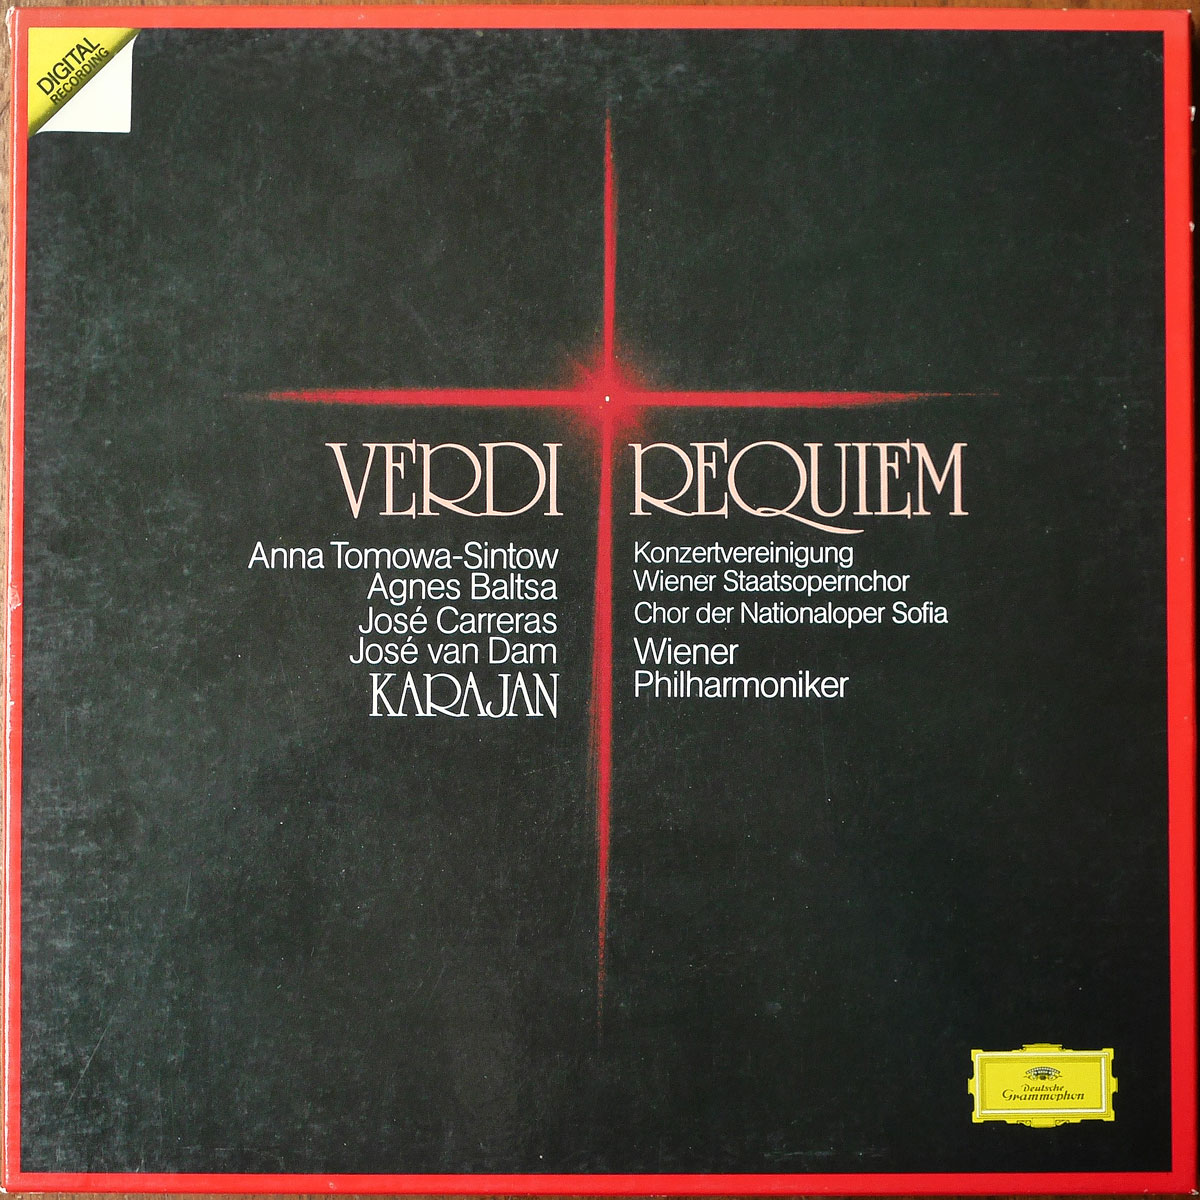 415 091 Verdi Requiem Karajan DGG Digital Aufnahme